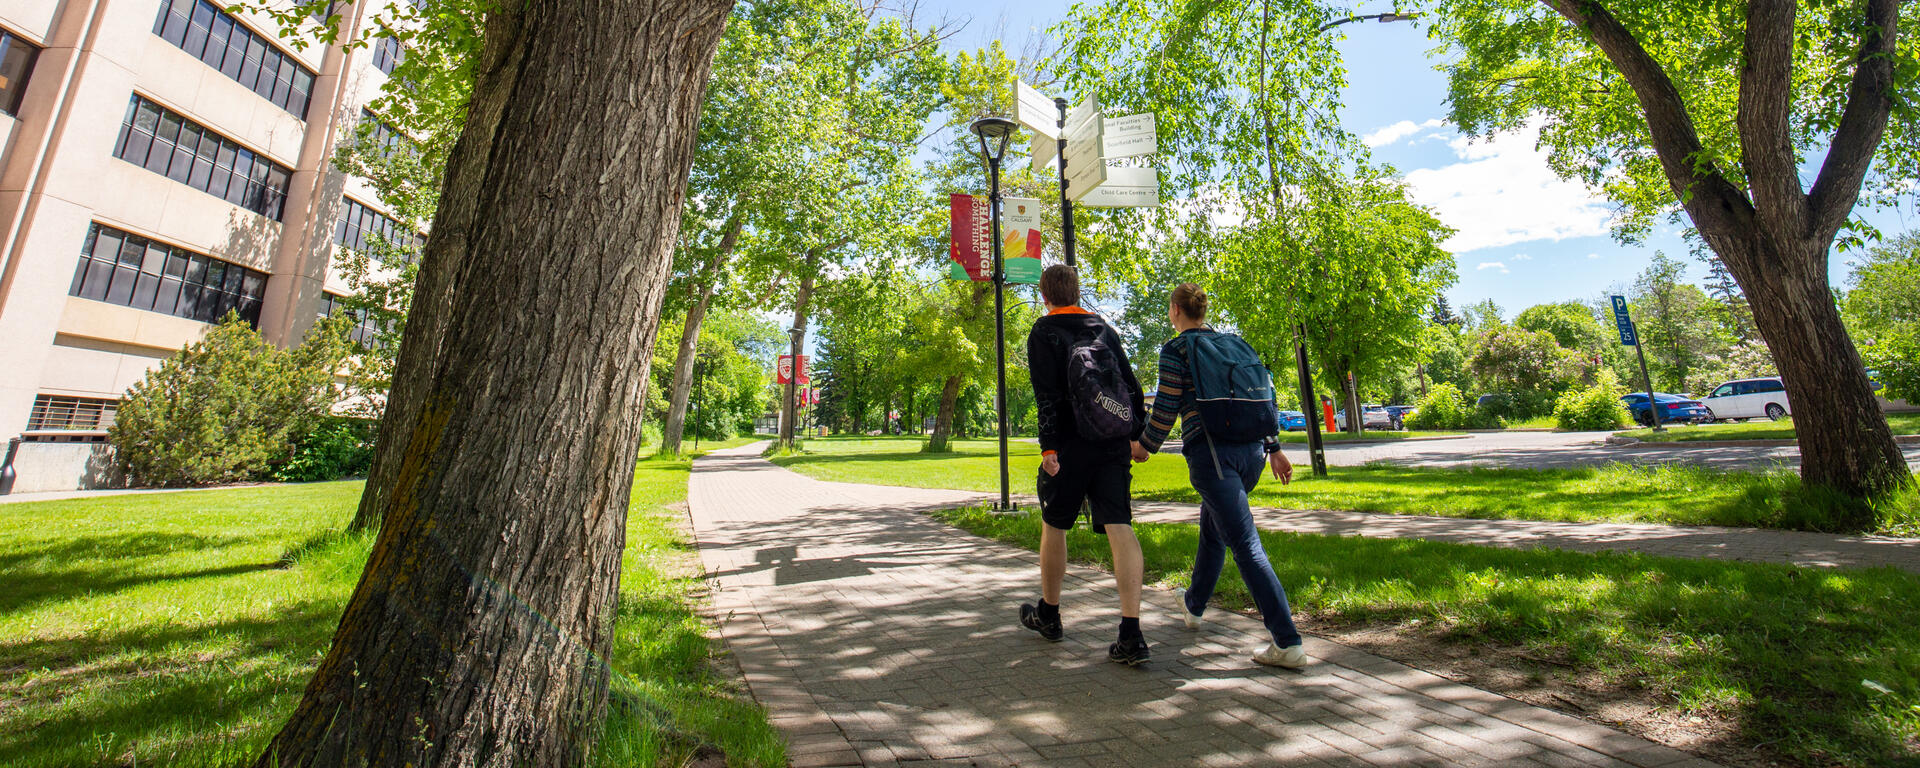 Students walk down a sidewalk on campus in the summer